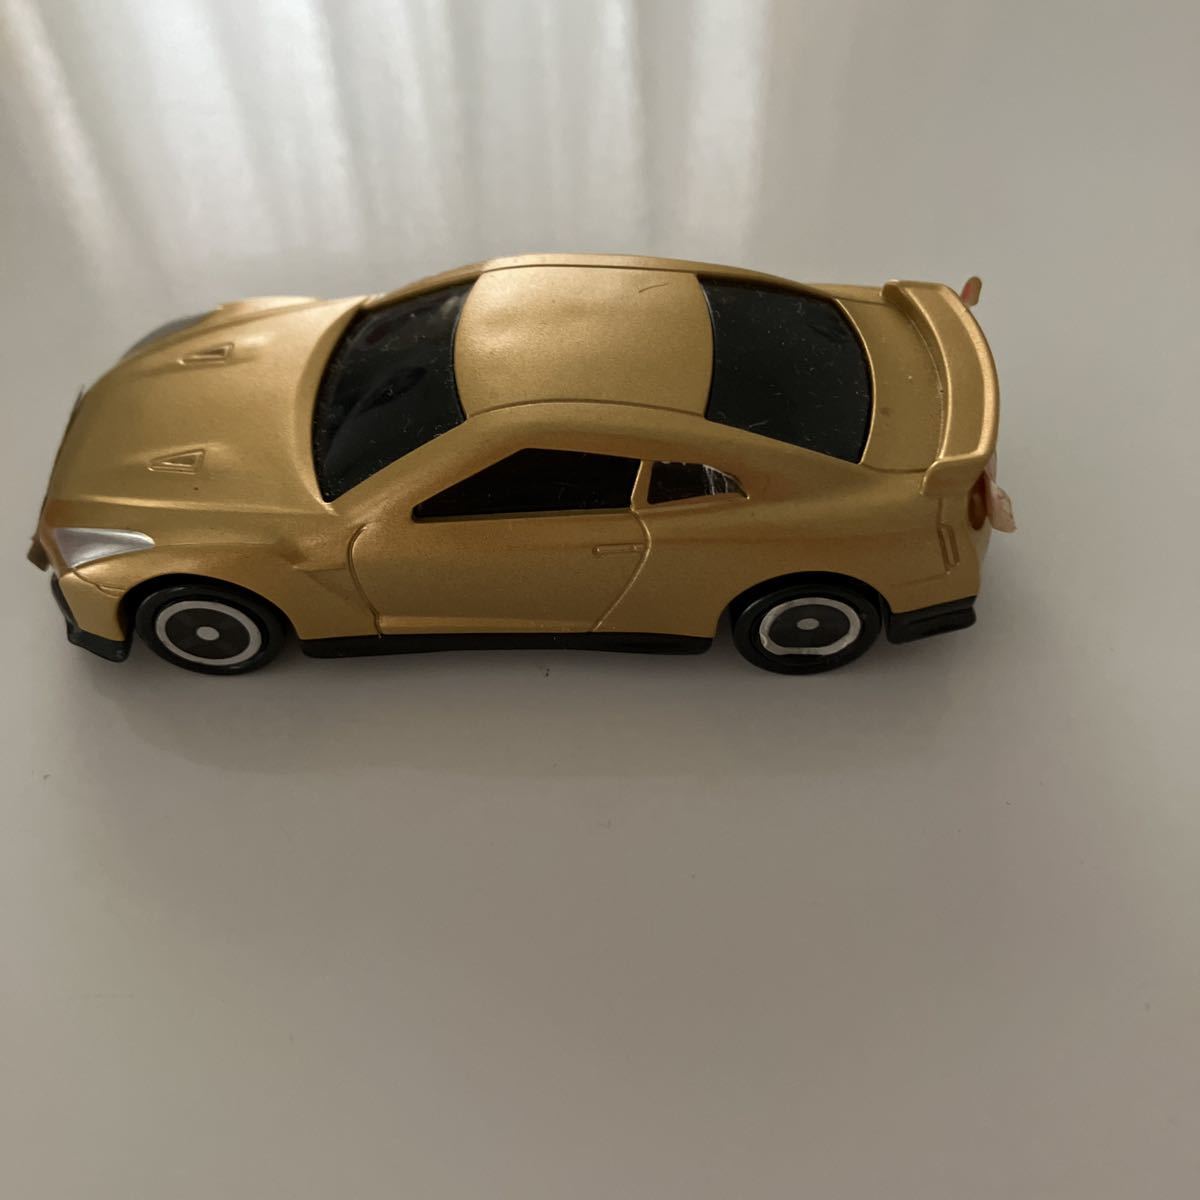  Tomica happy комплект Nissan GT-R специальный specification Gold 